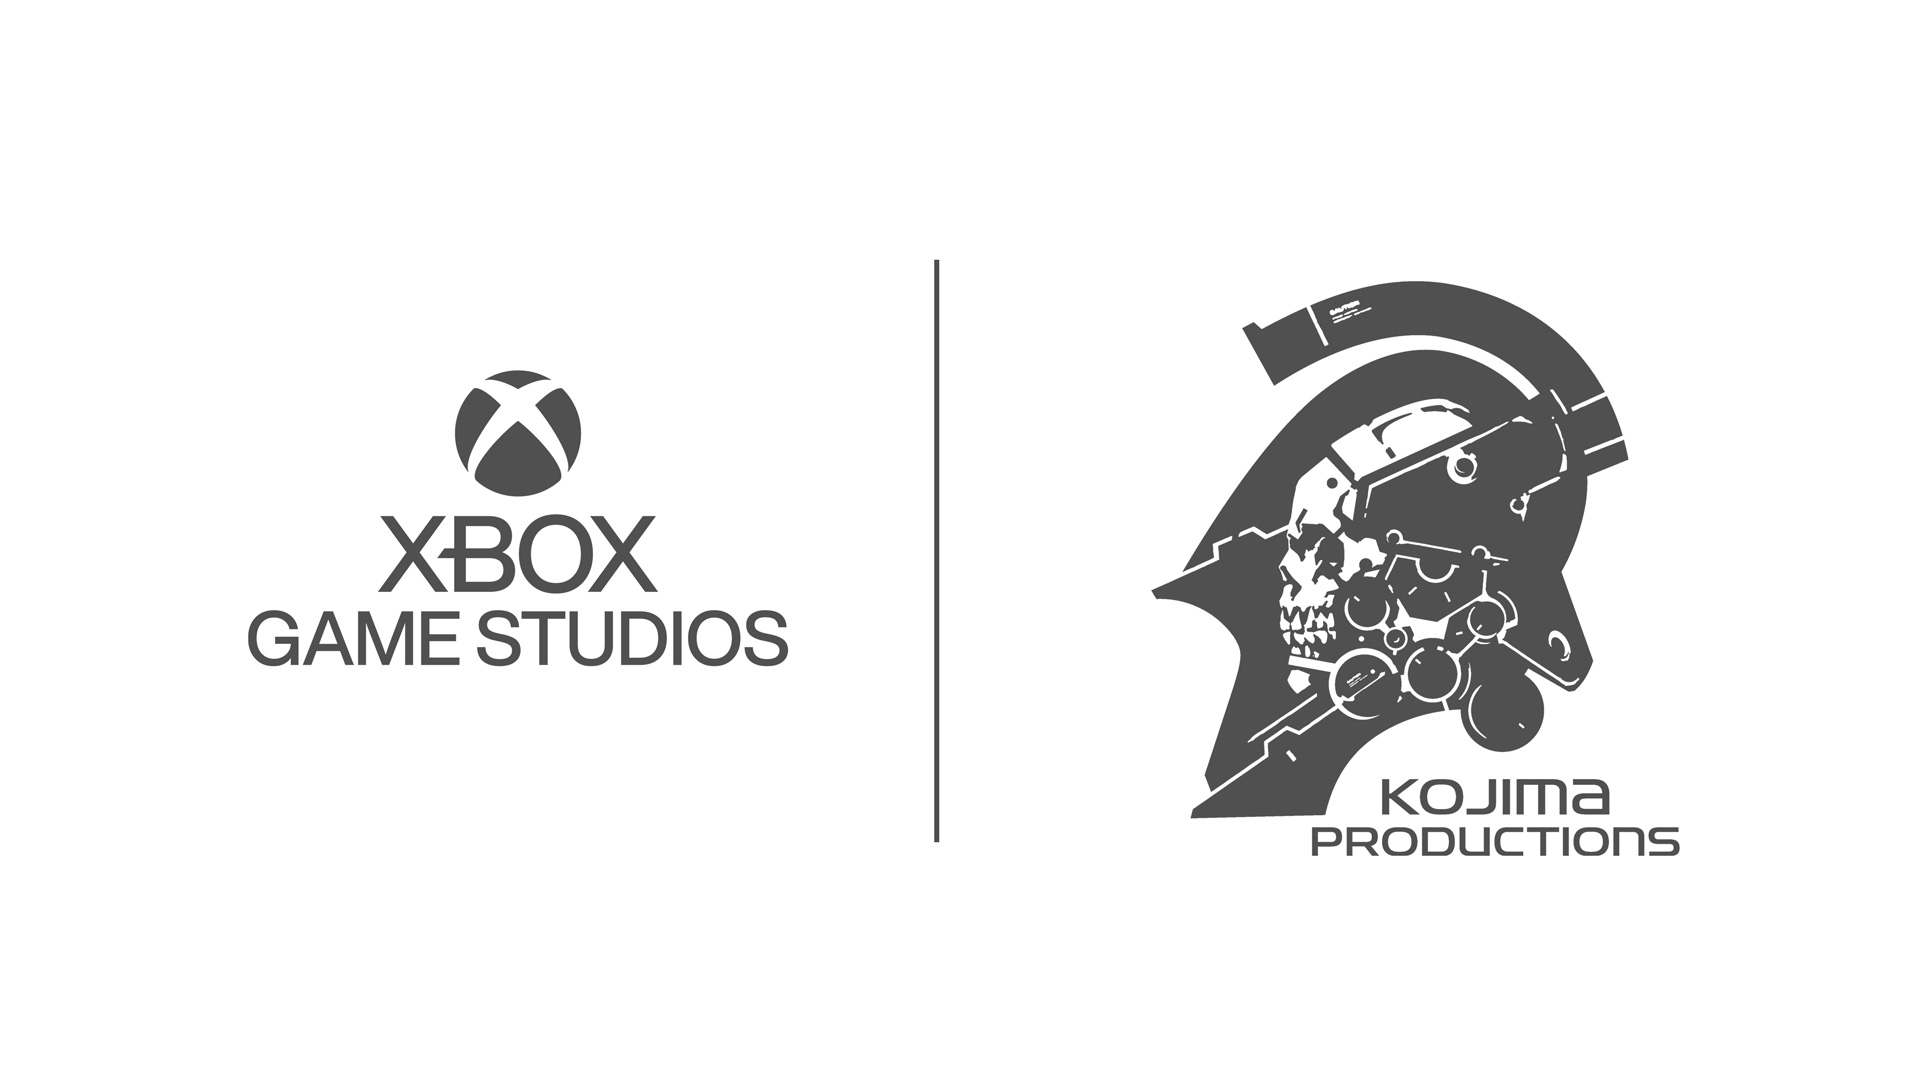 Announcing a New Partnership Between Xbox Game Studios and Kojima